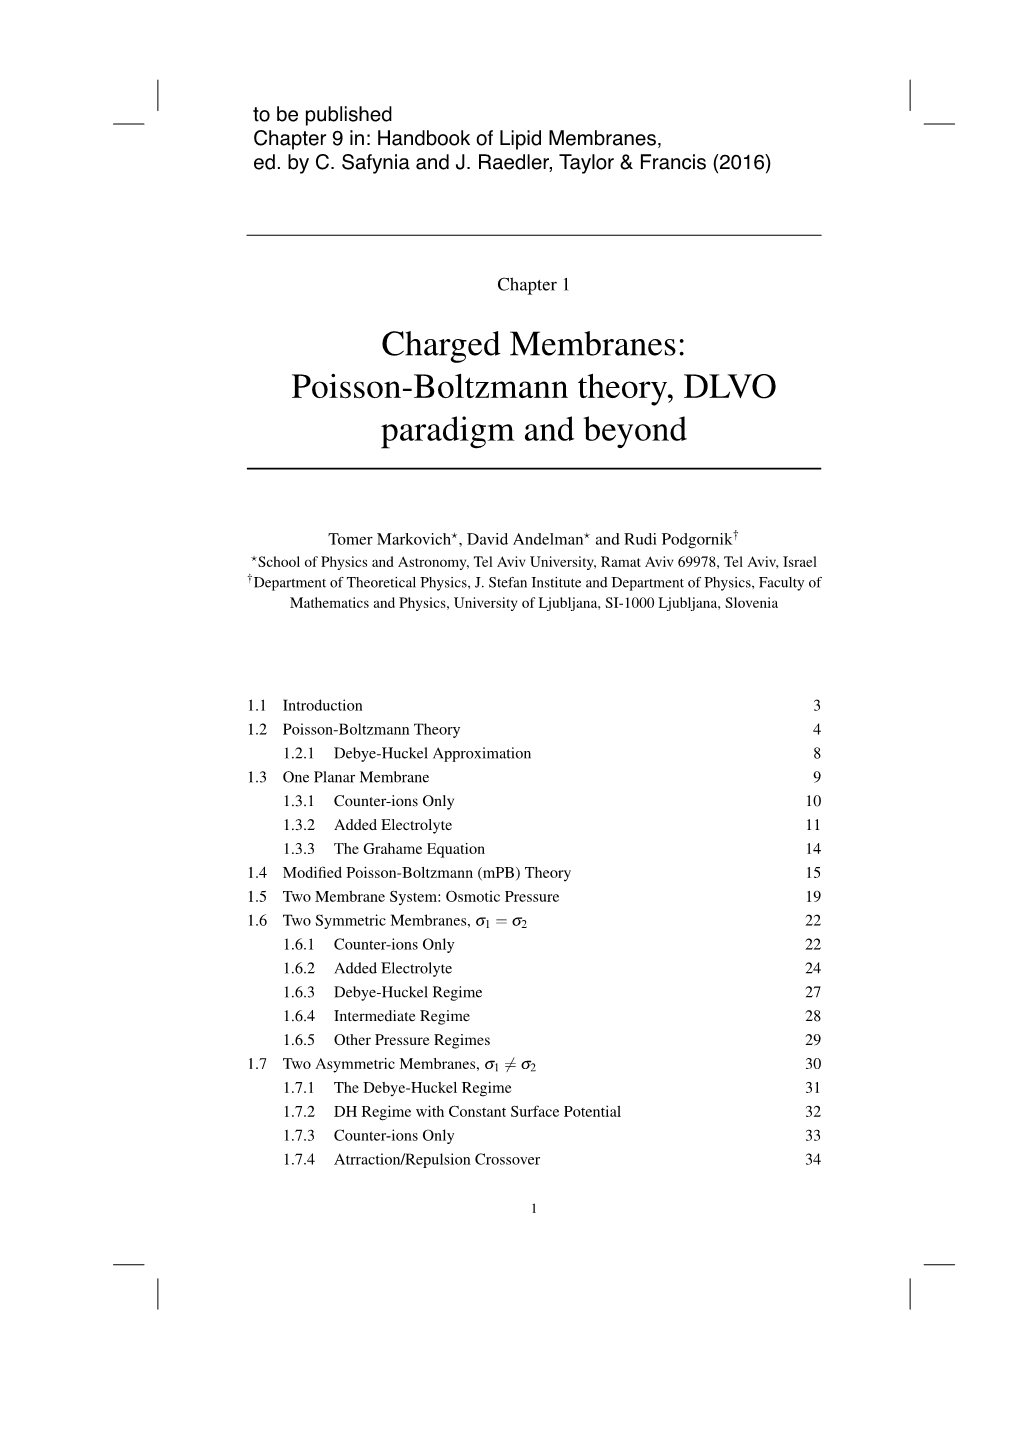 Poisson-Boltzmann Theory, DLVO Paradigm and Beyond